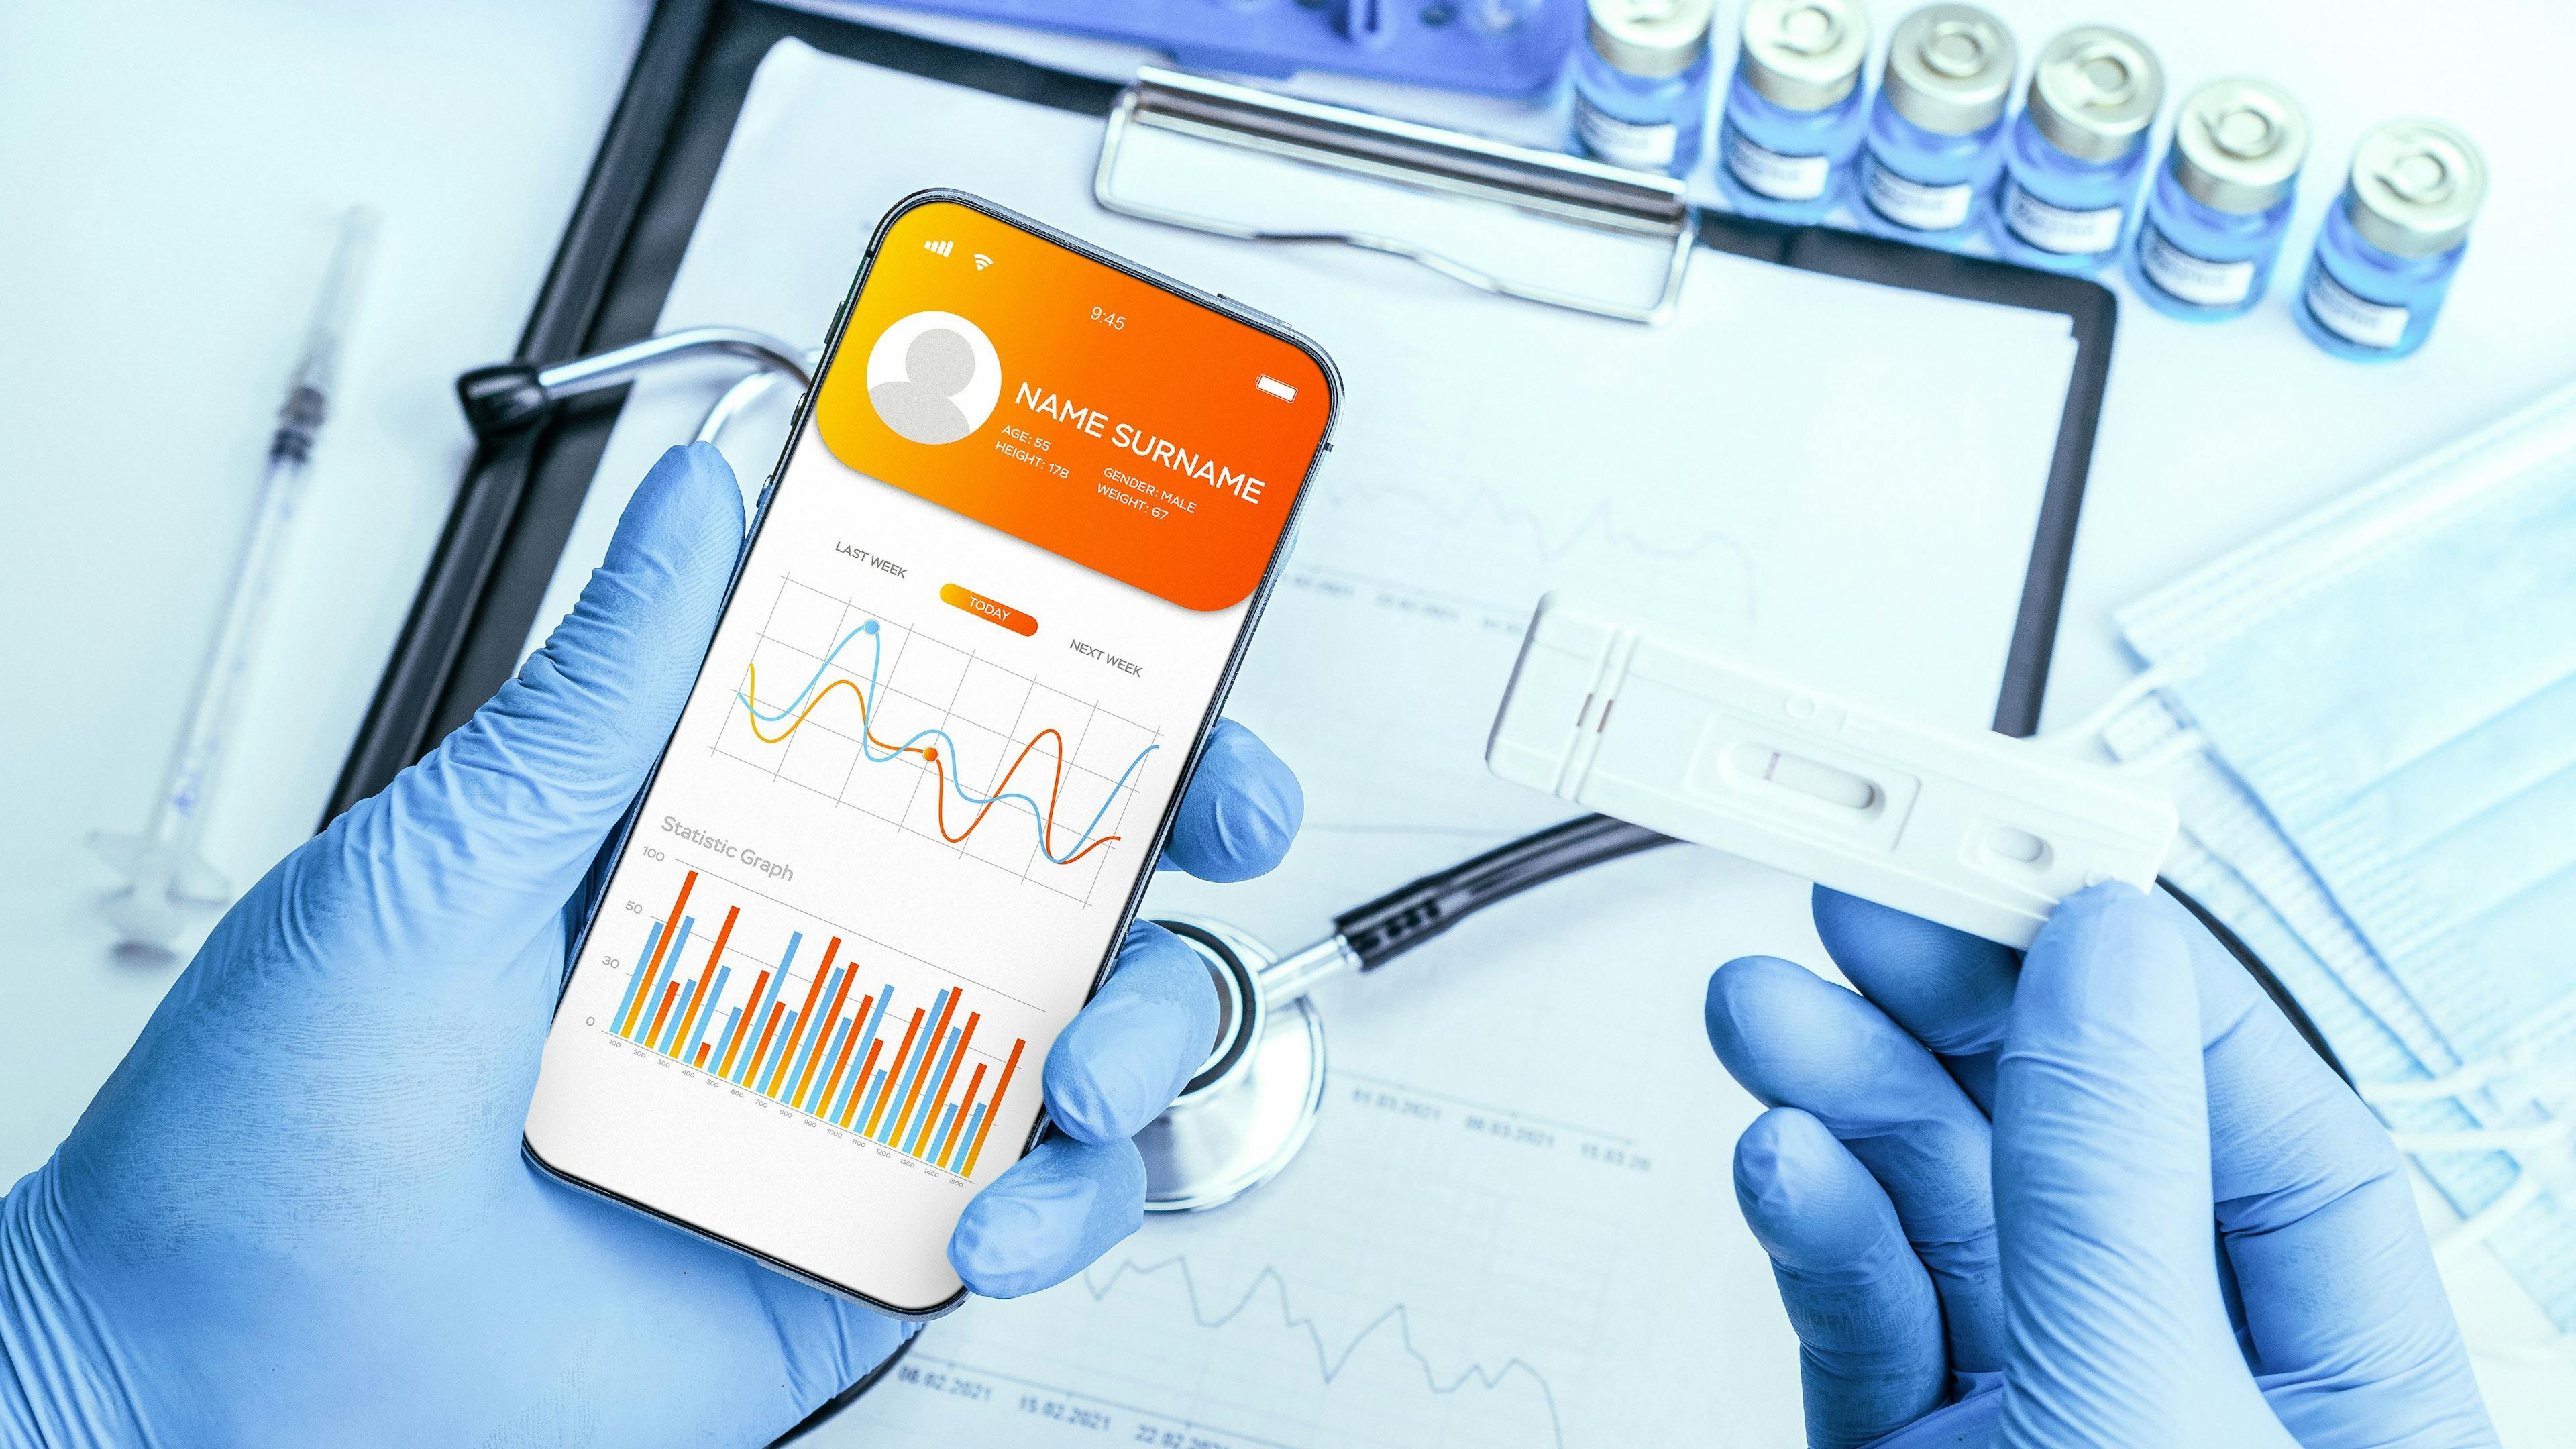 Smartphone app that tracks medical data | Image Credit: Maksym - stock.adobe.com